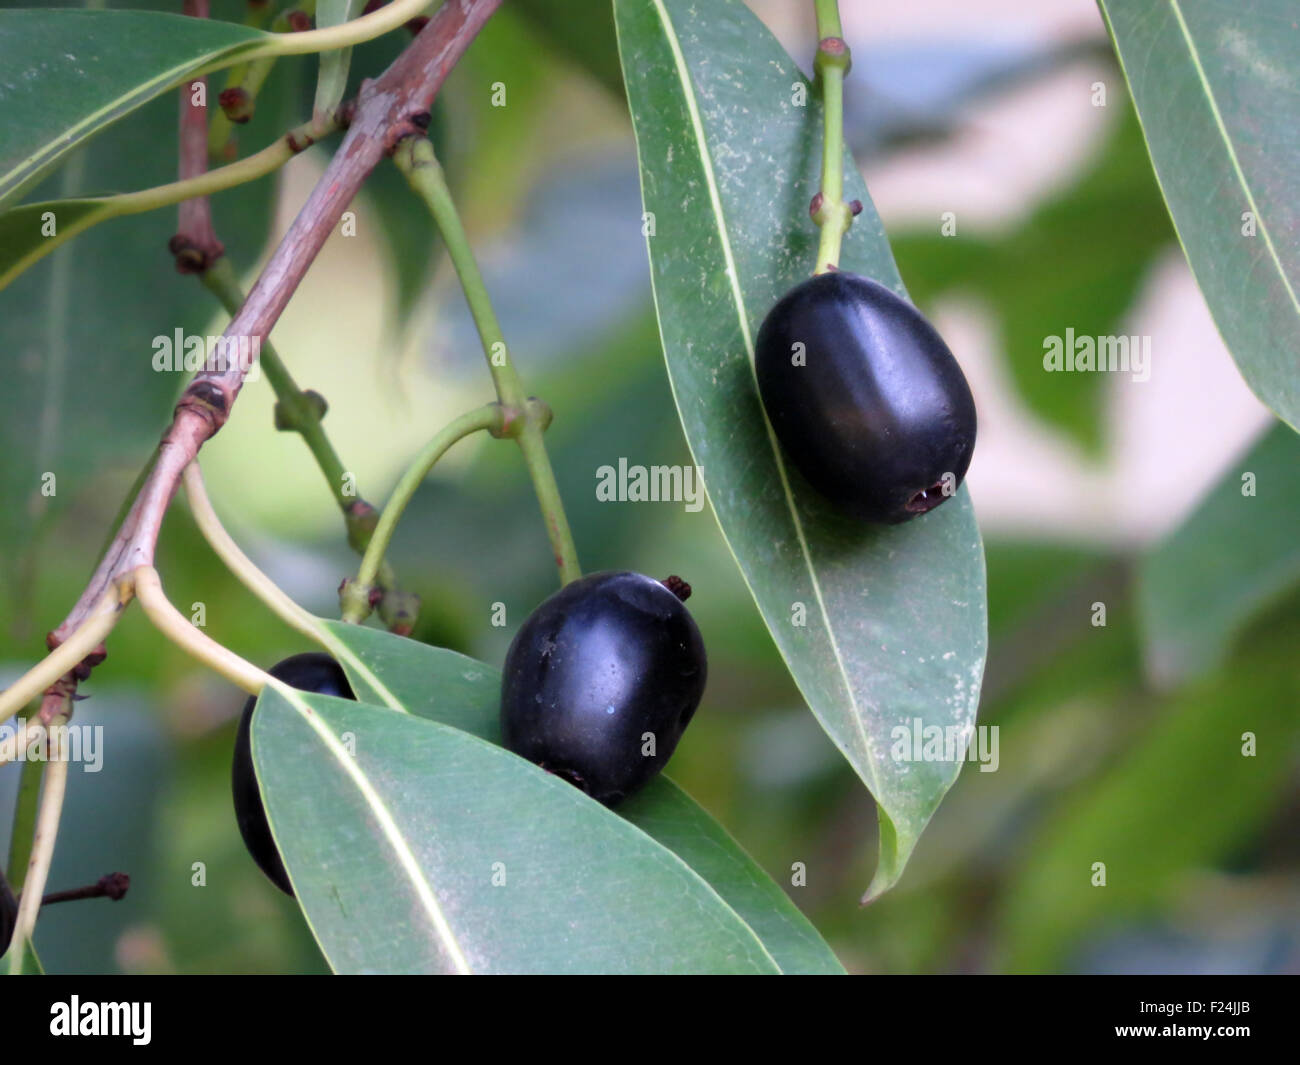 Ripe Syzygium cumini, jambul, jambolan, jamblang, or jamun fruit as it is called found in the tropics Stock Photo